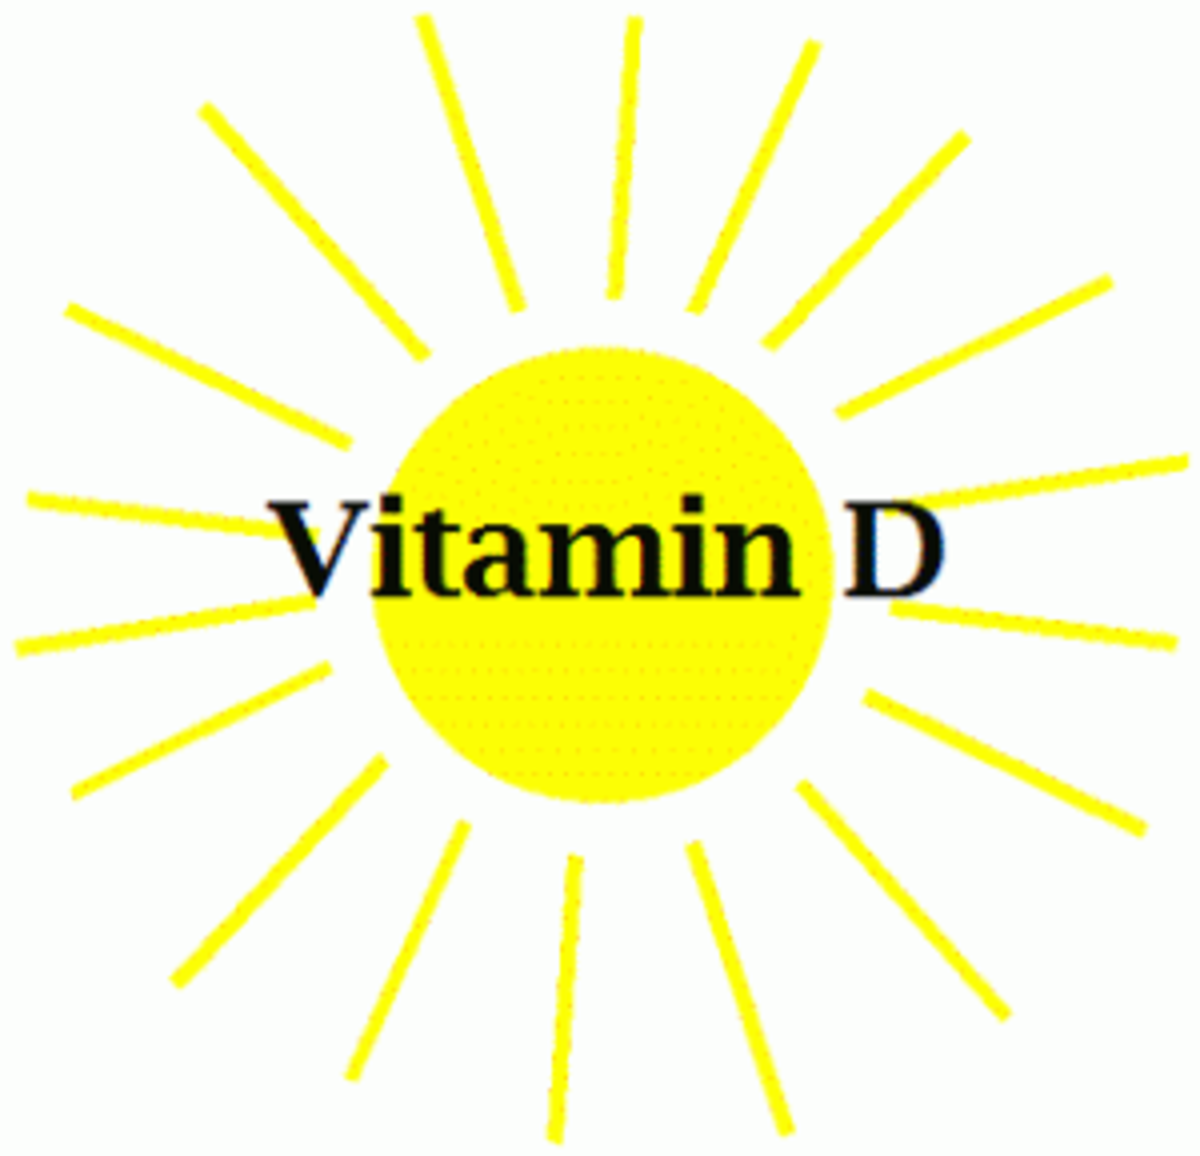 Sun vitamin. Витамин д солнце. Витамин д солнышко. Витамин солнца. Солнечный витамин.